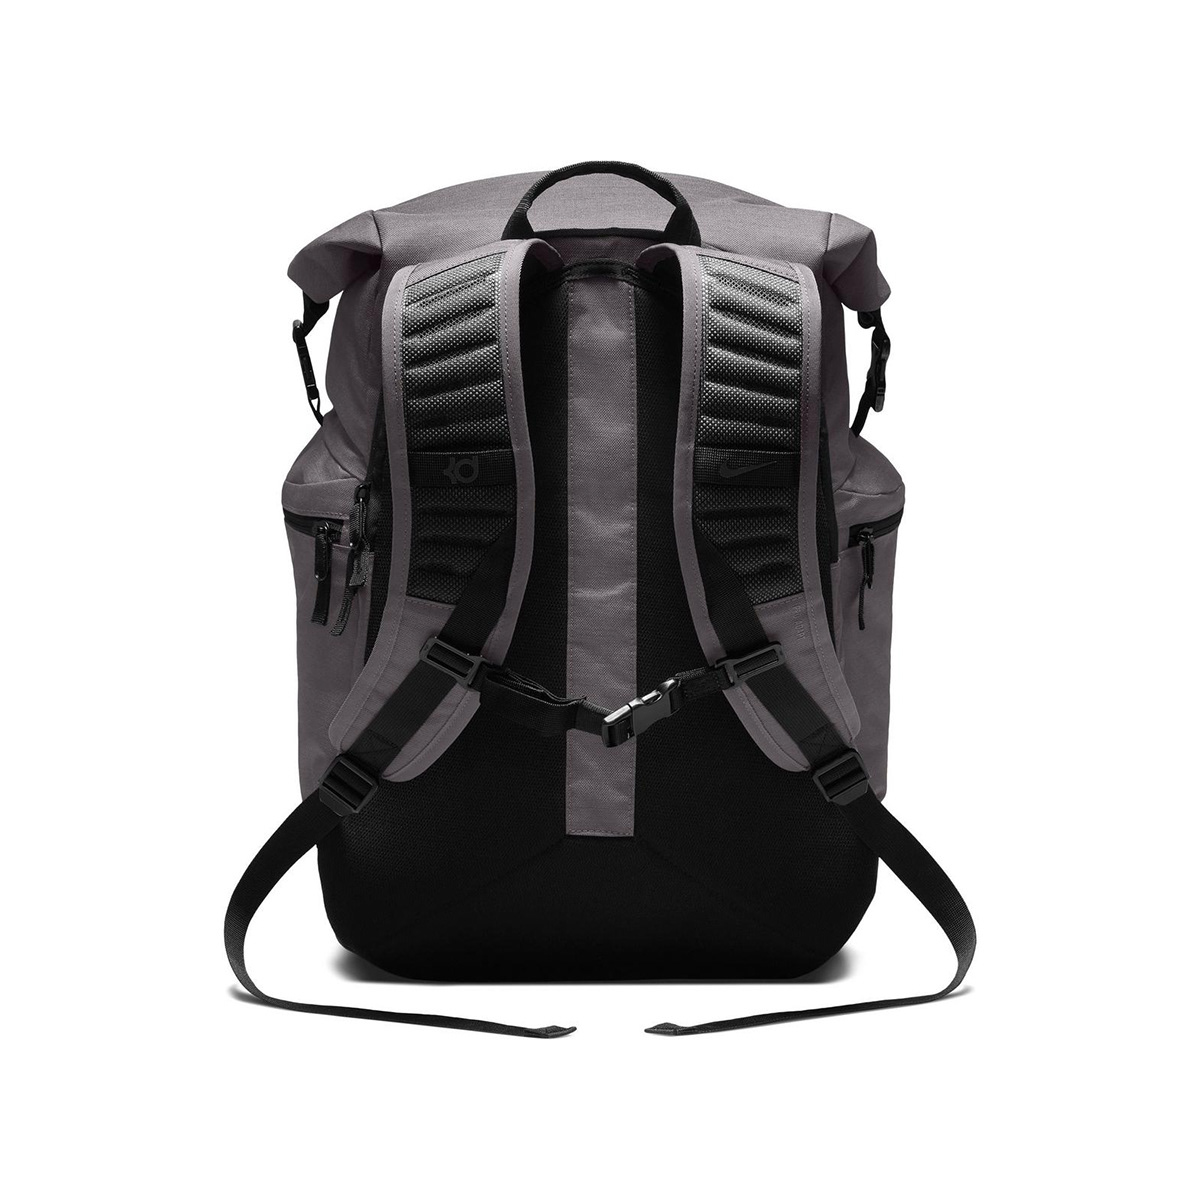 backpack bag Durant kd lifestyle Nike Performance sport